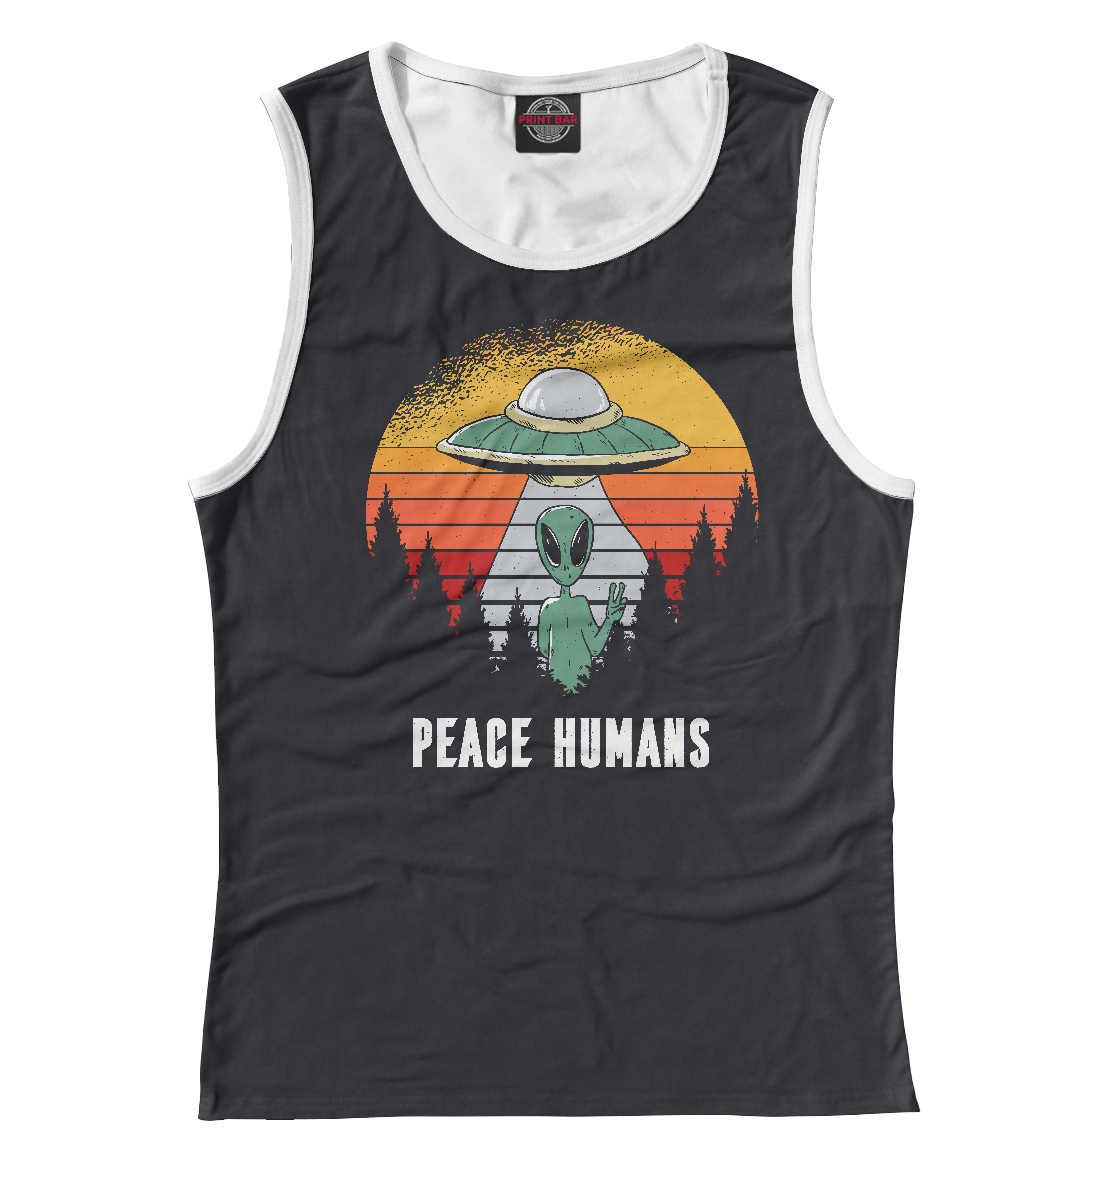 Peace humans peace humans